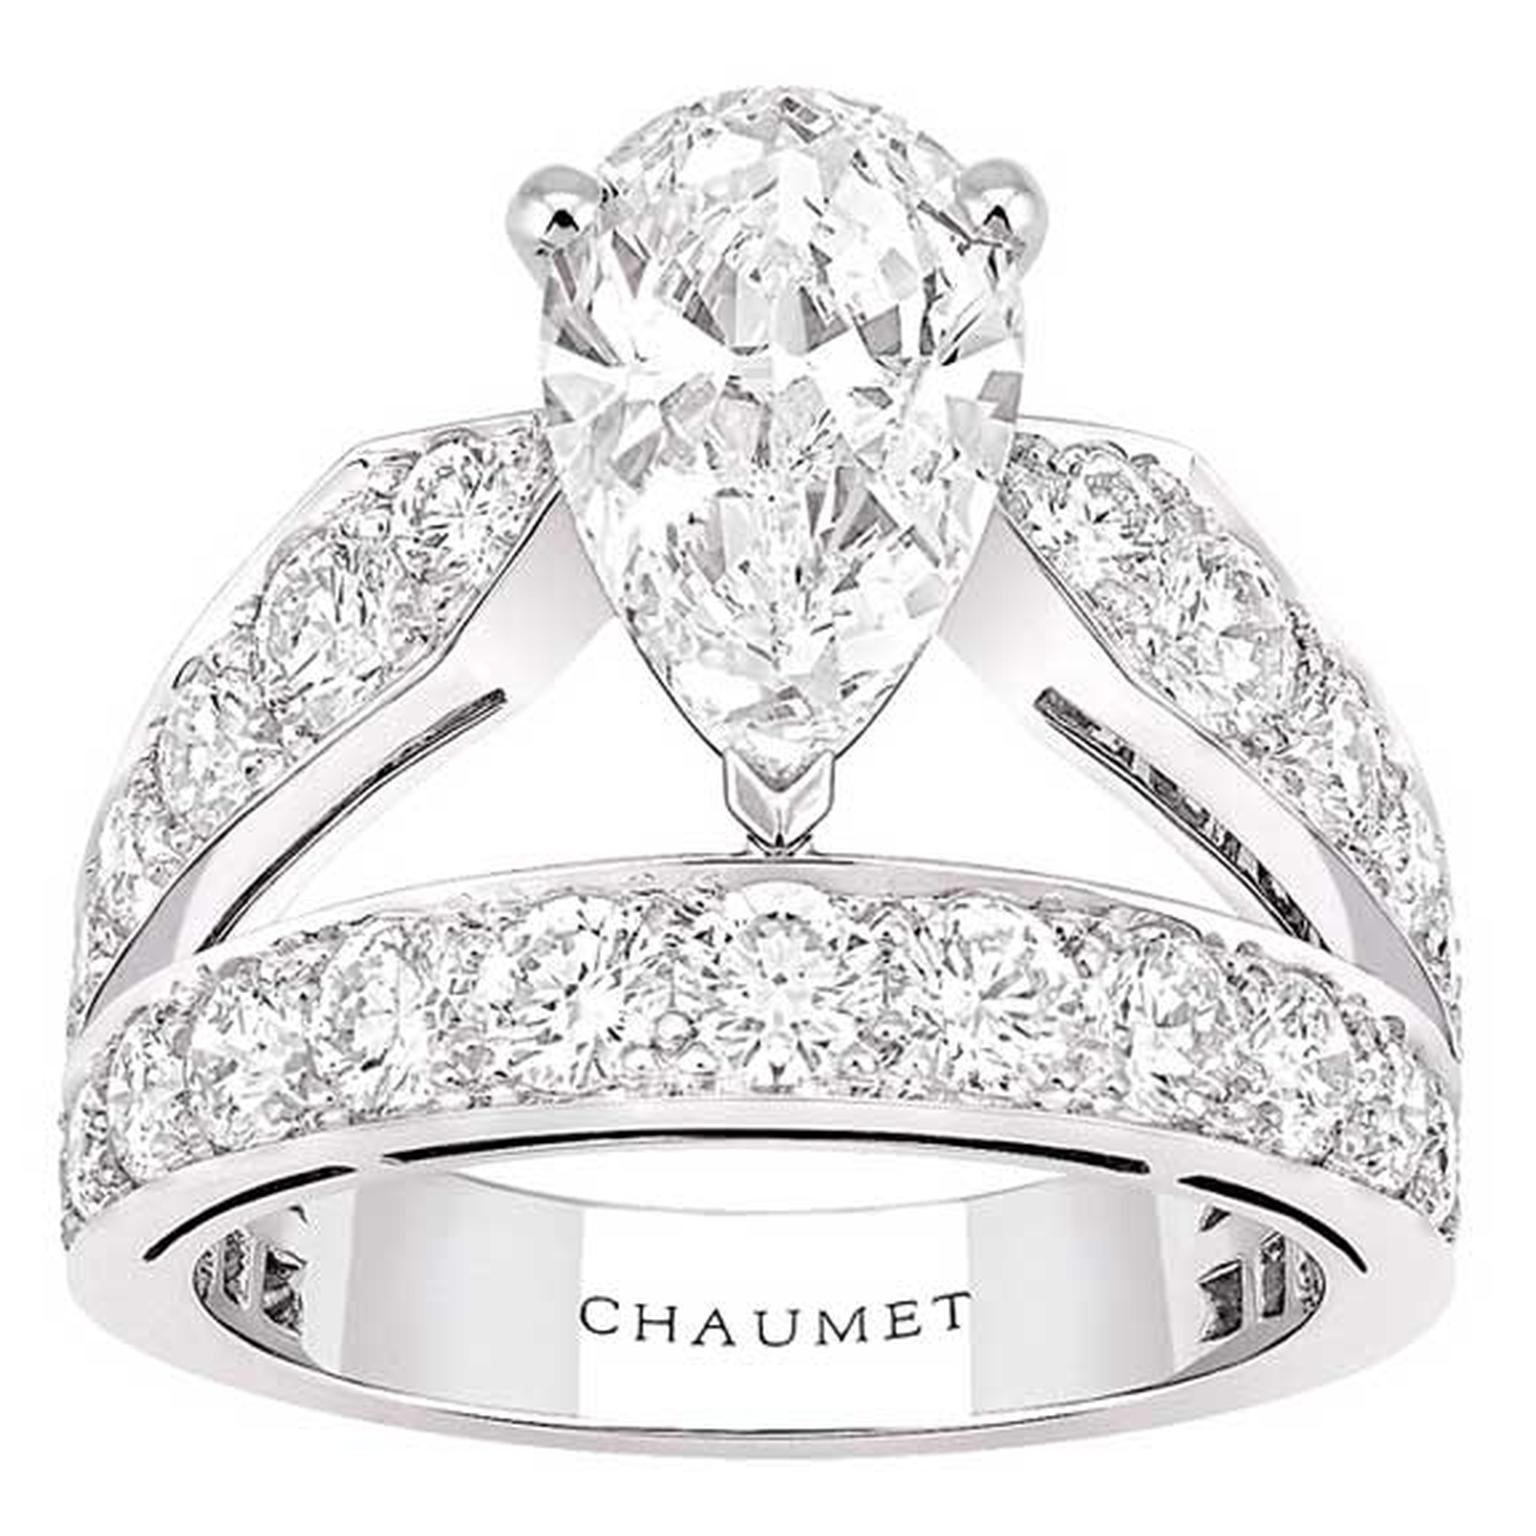 Chaumet Brand Image